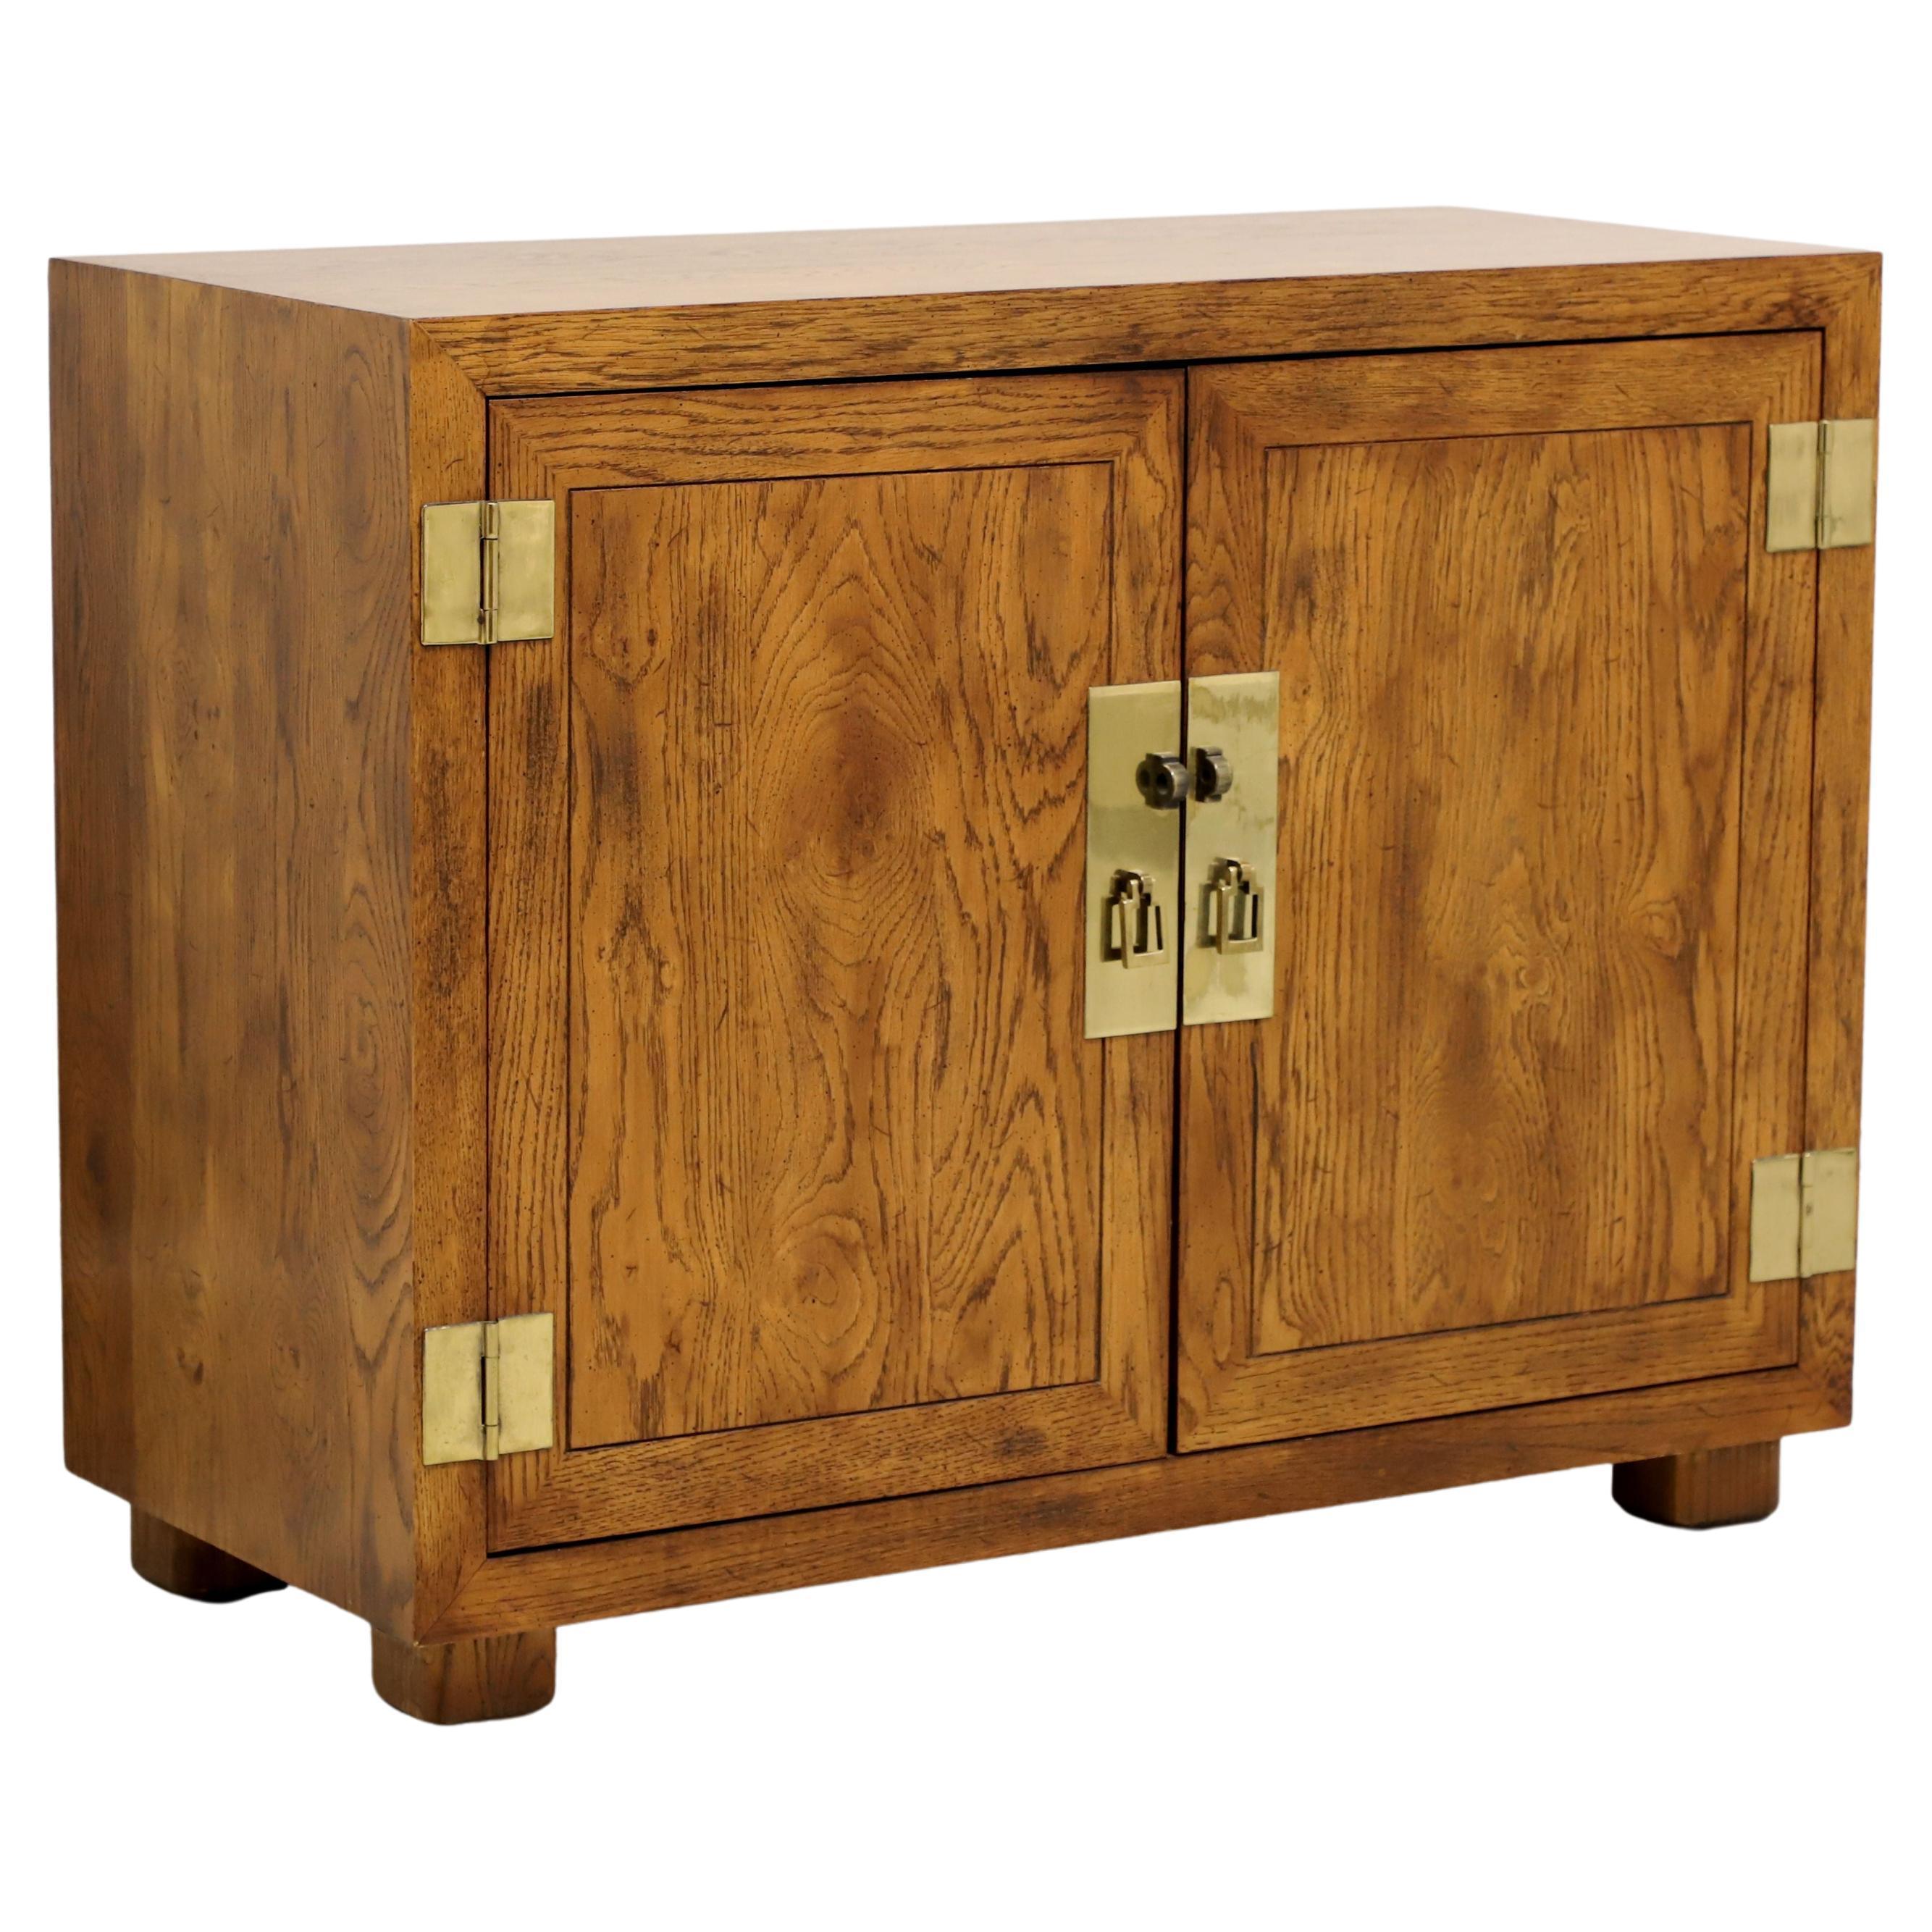 HENREDON Artefacts Knotty Oak Campaign Style Console Cabinet - A